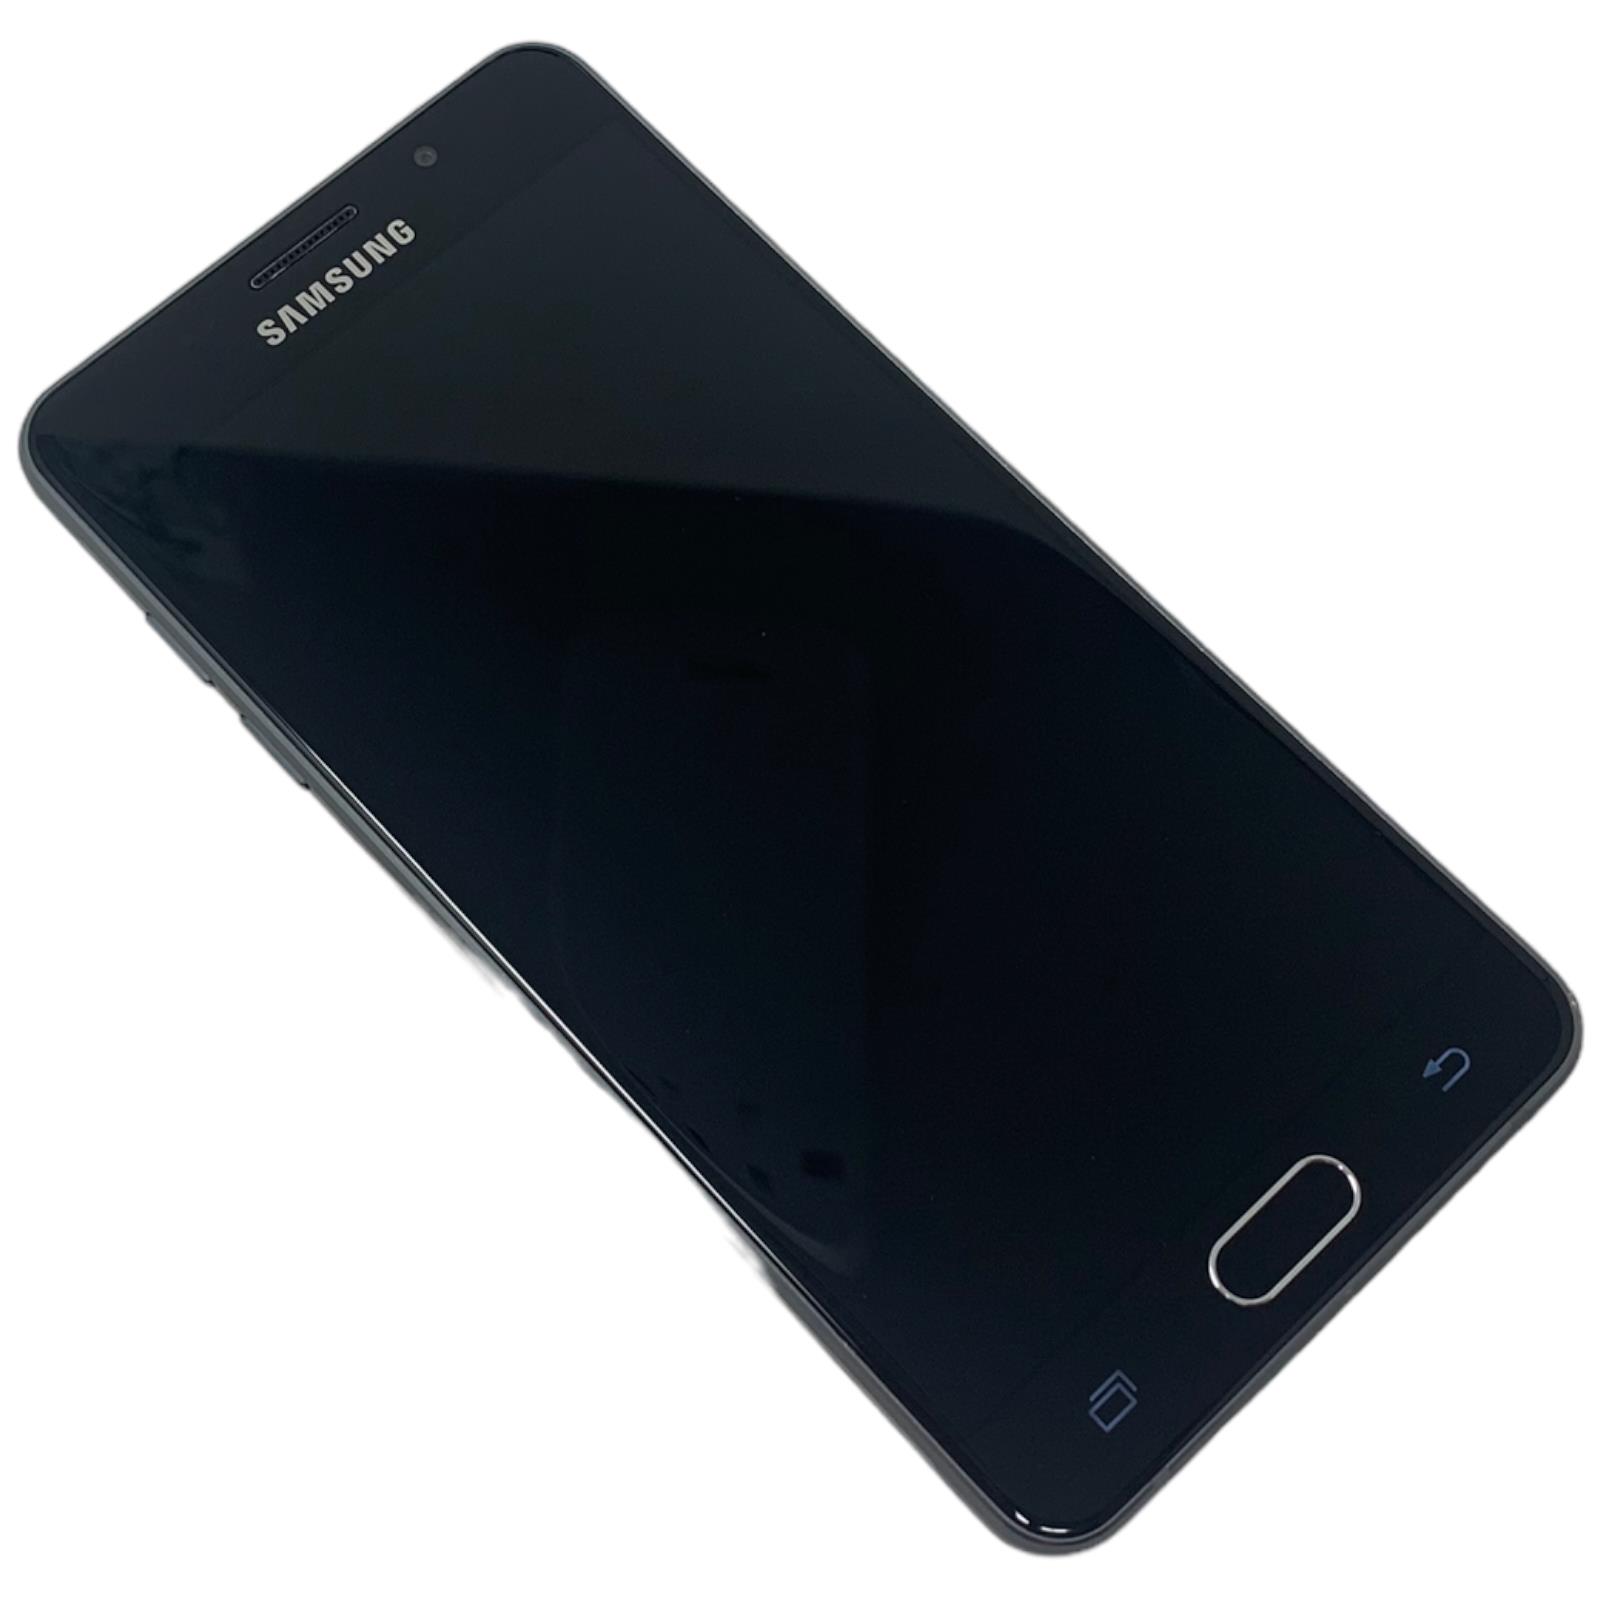 RSD6980 Samsung A5 2016 16Gb GR. A Gar. 12M Fattura